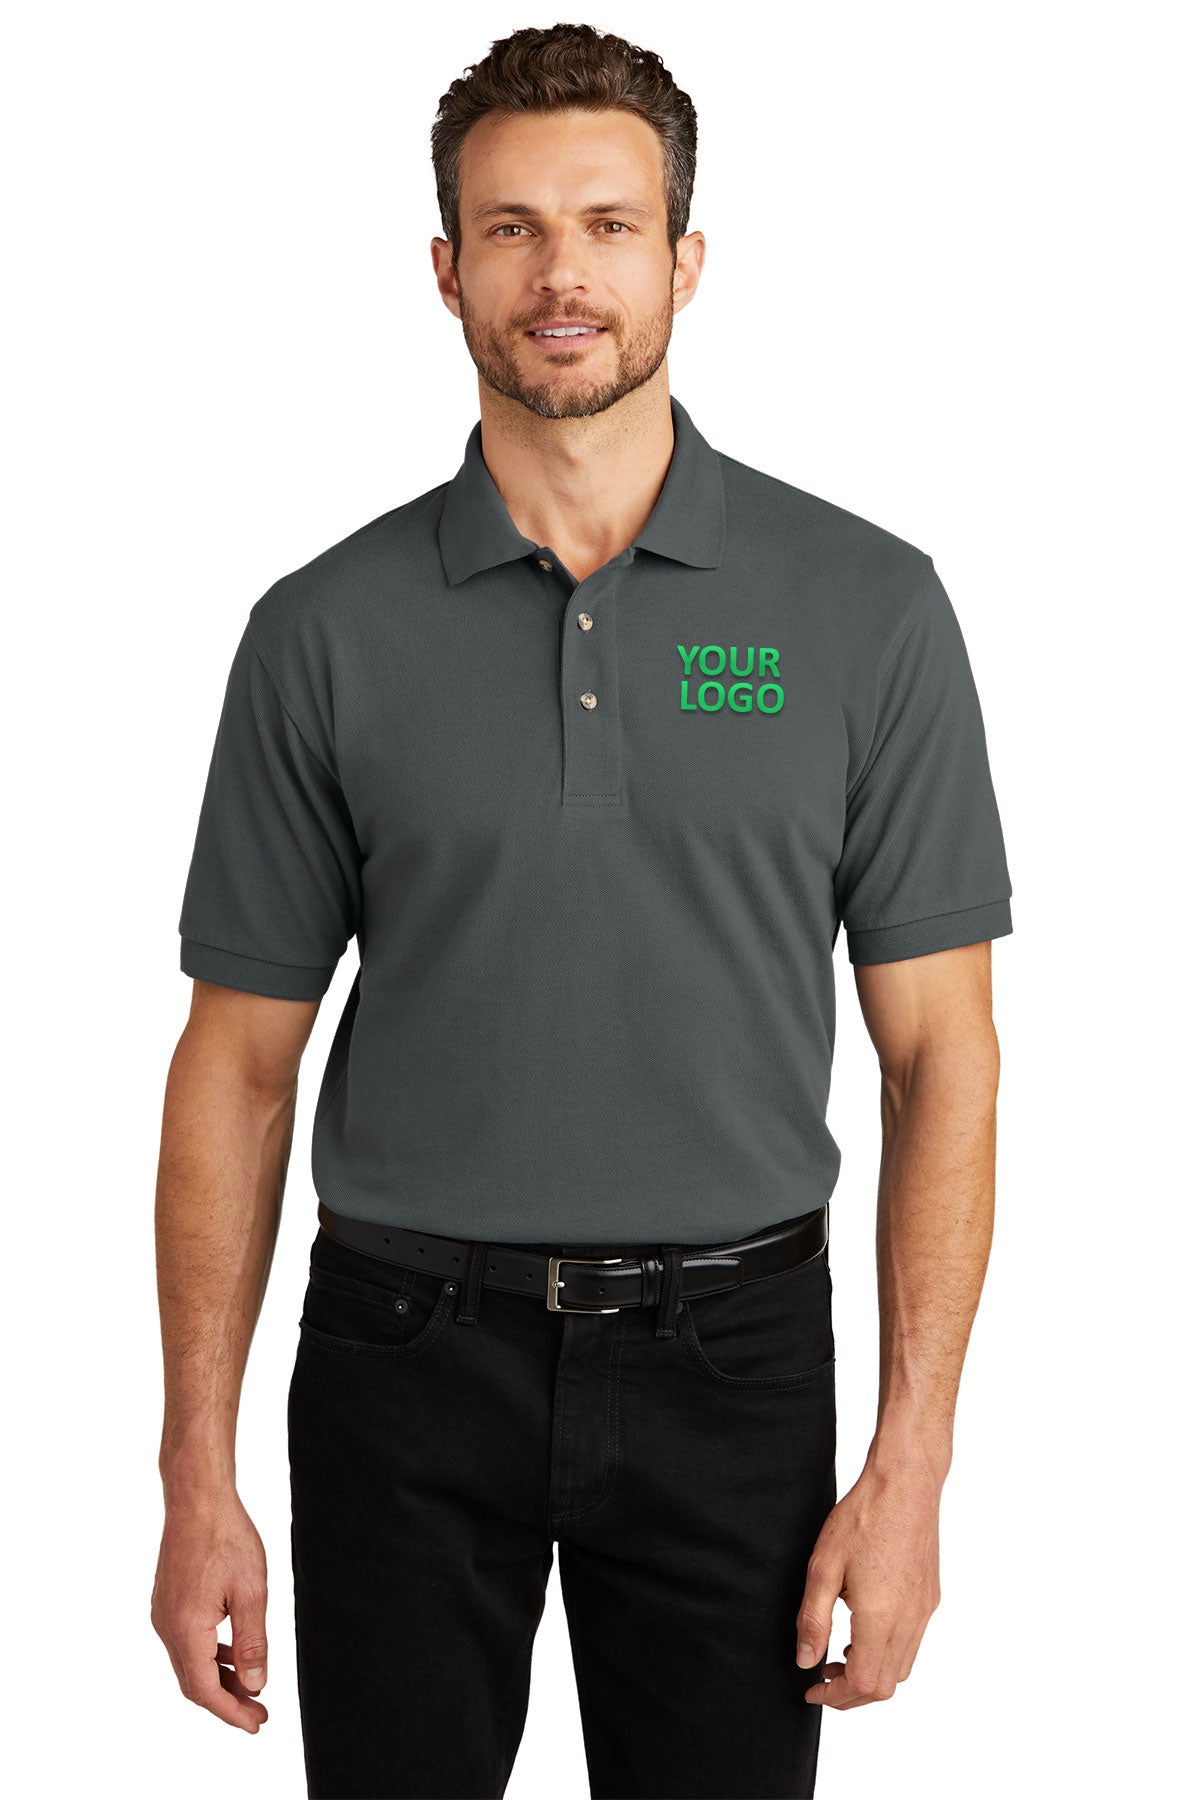 port authority steel grey k420 polo shirts with company logo